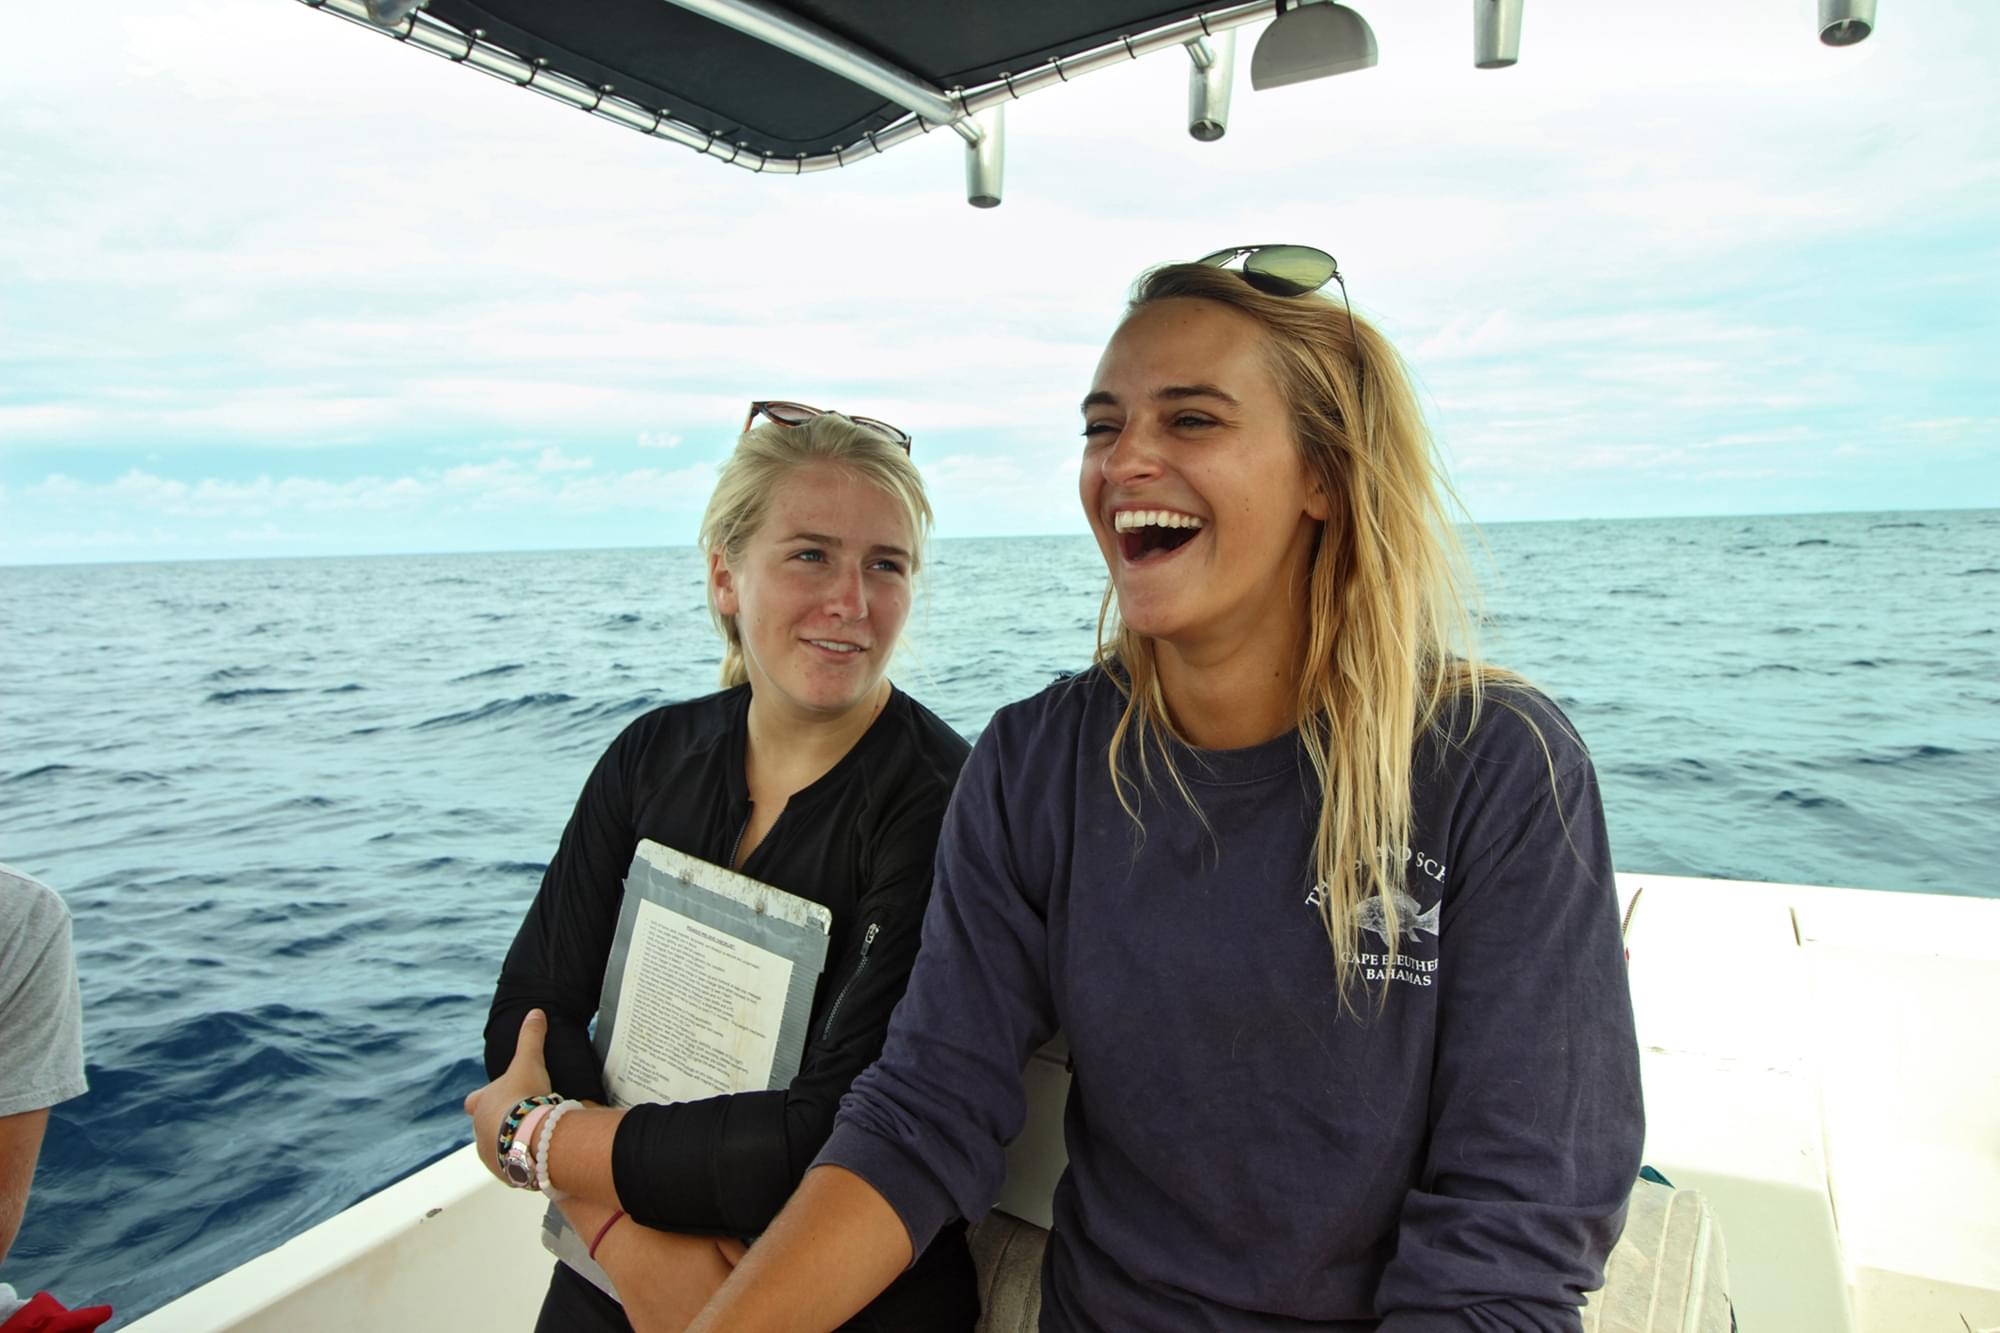 Mackey leads a deep sea trip with Island school students